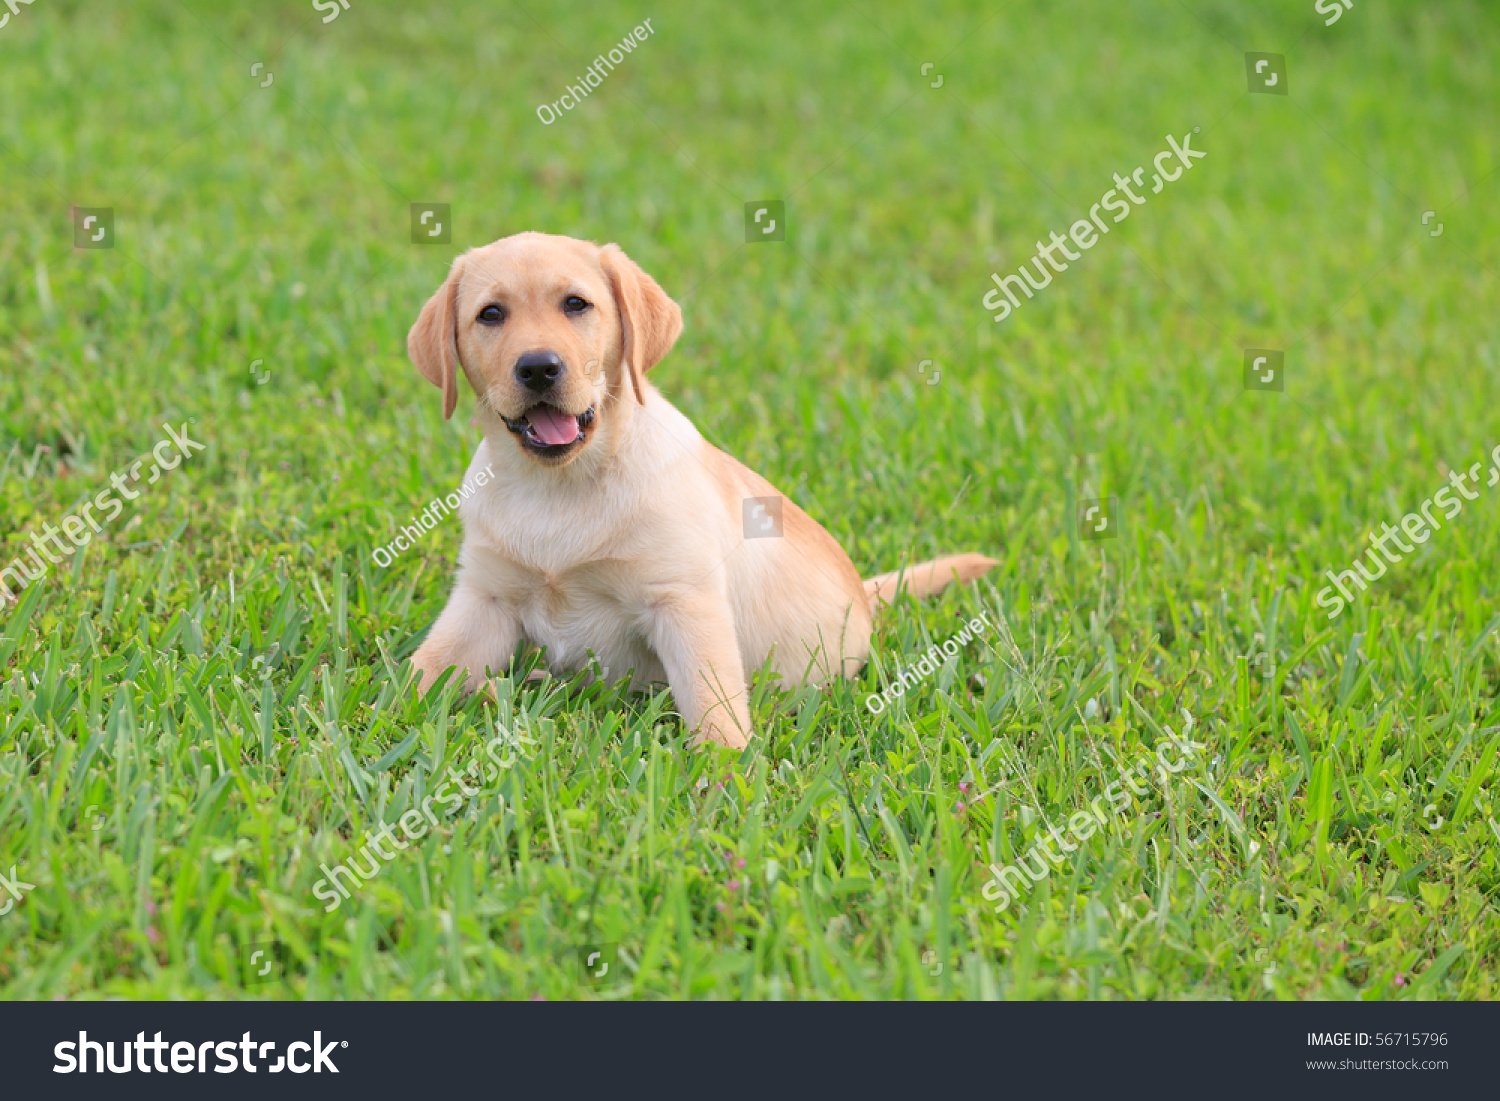 Yellow Labrador Puppy on green grass lawn #56715796